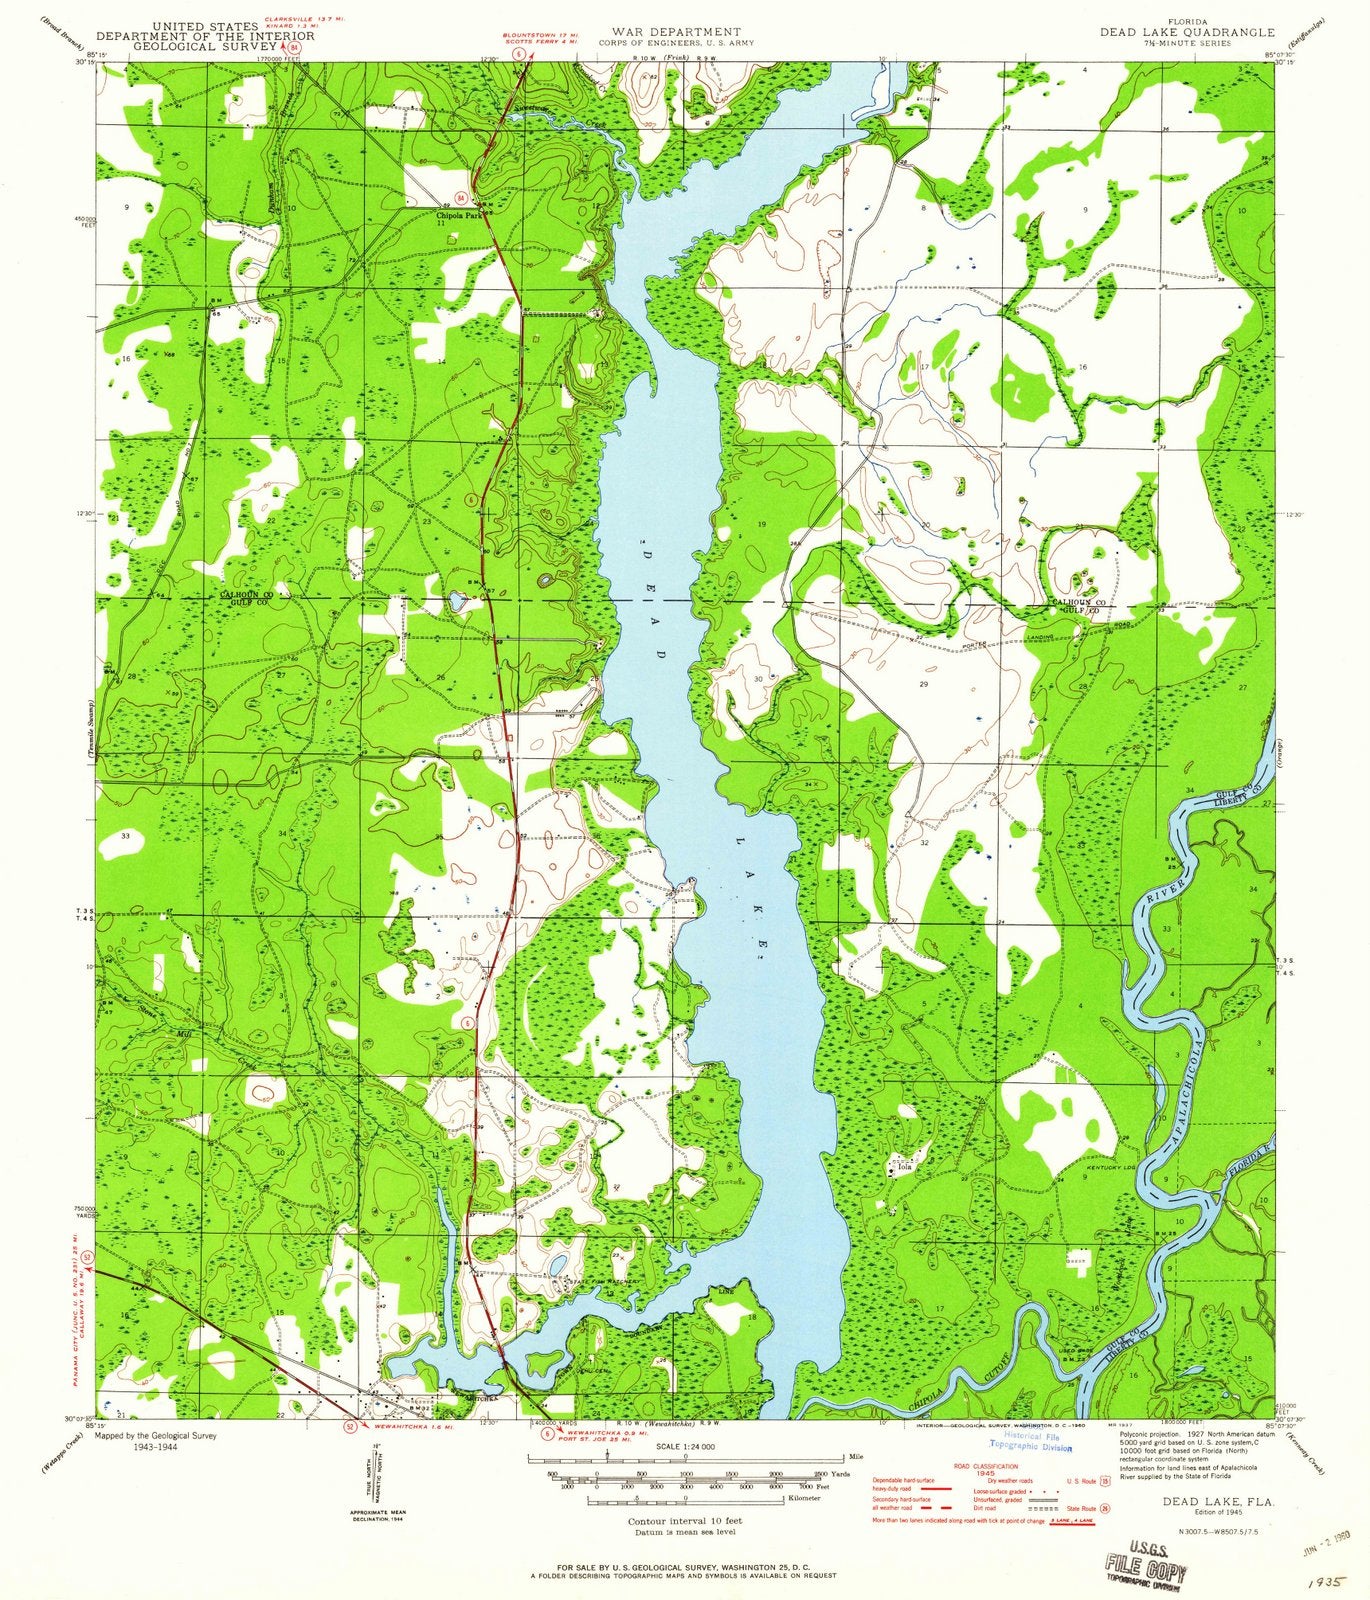 1945 Dead Lake, FL - Florida - USGS Topographic Map v2